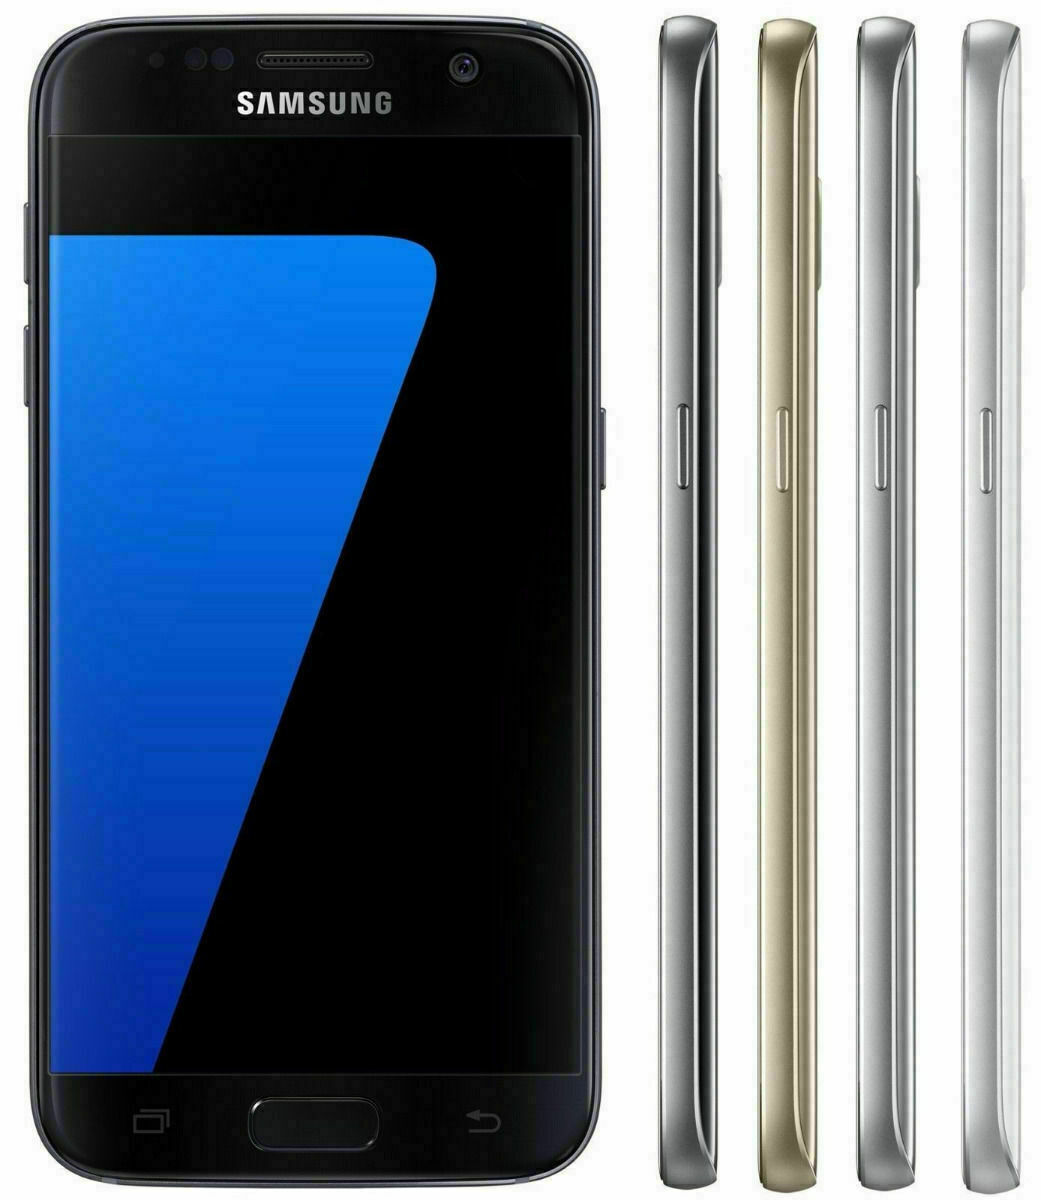 Samsung Galaxy Unlocked Smartphone 5 inch Random model and color Excellent A++++